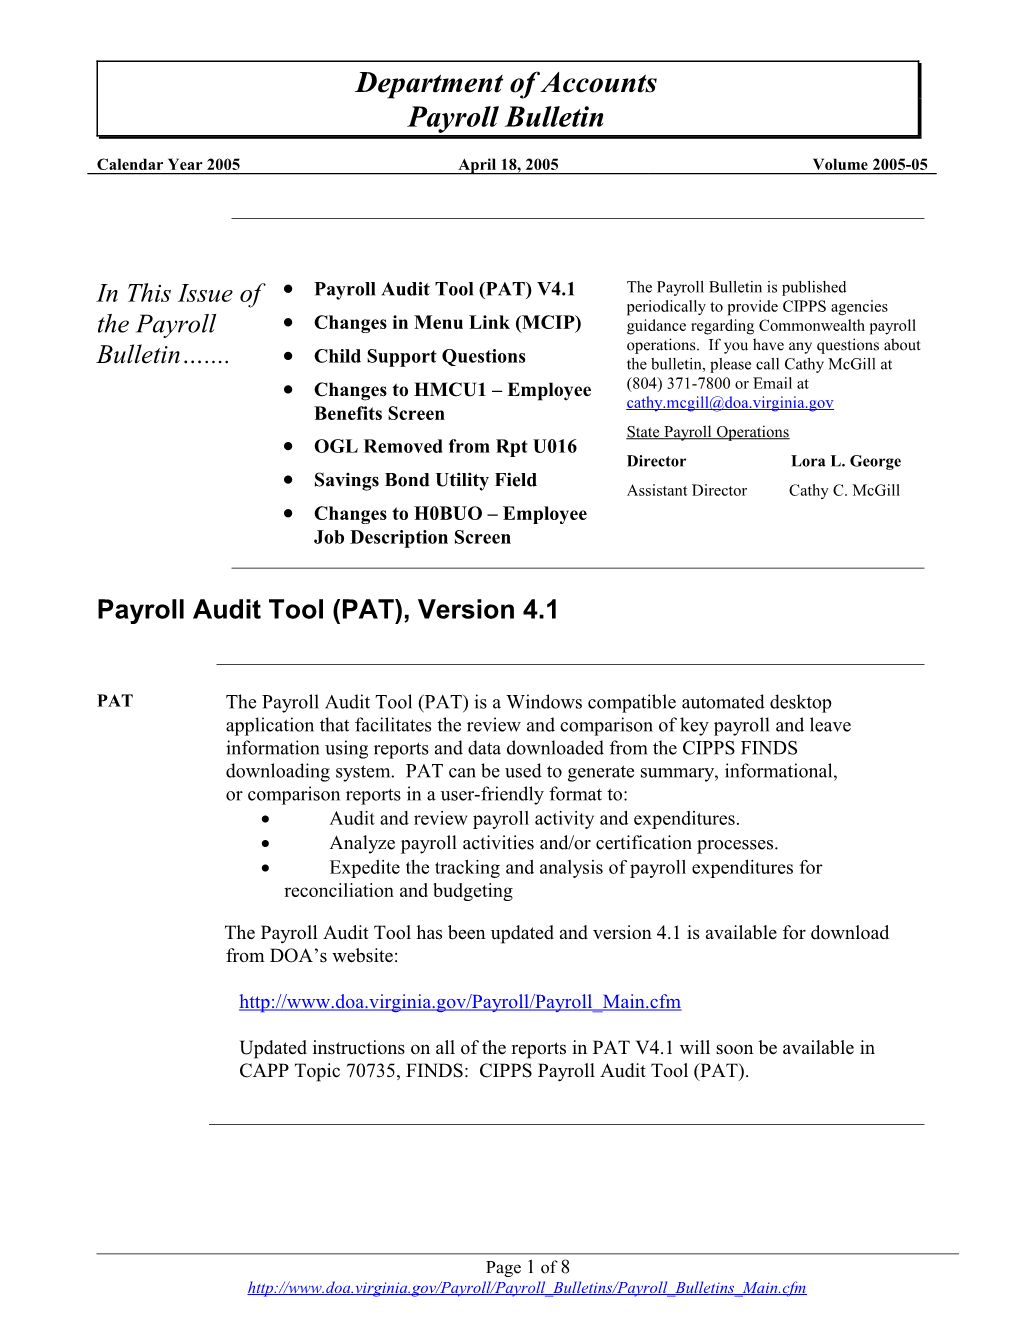 Payroll Bulletin, Volume 2005-05